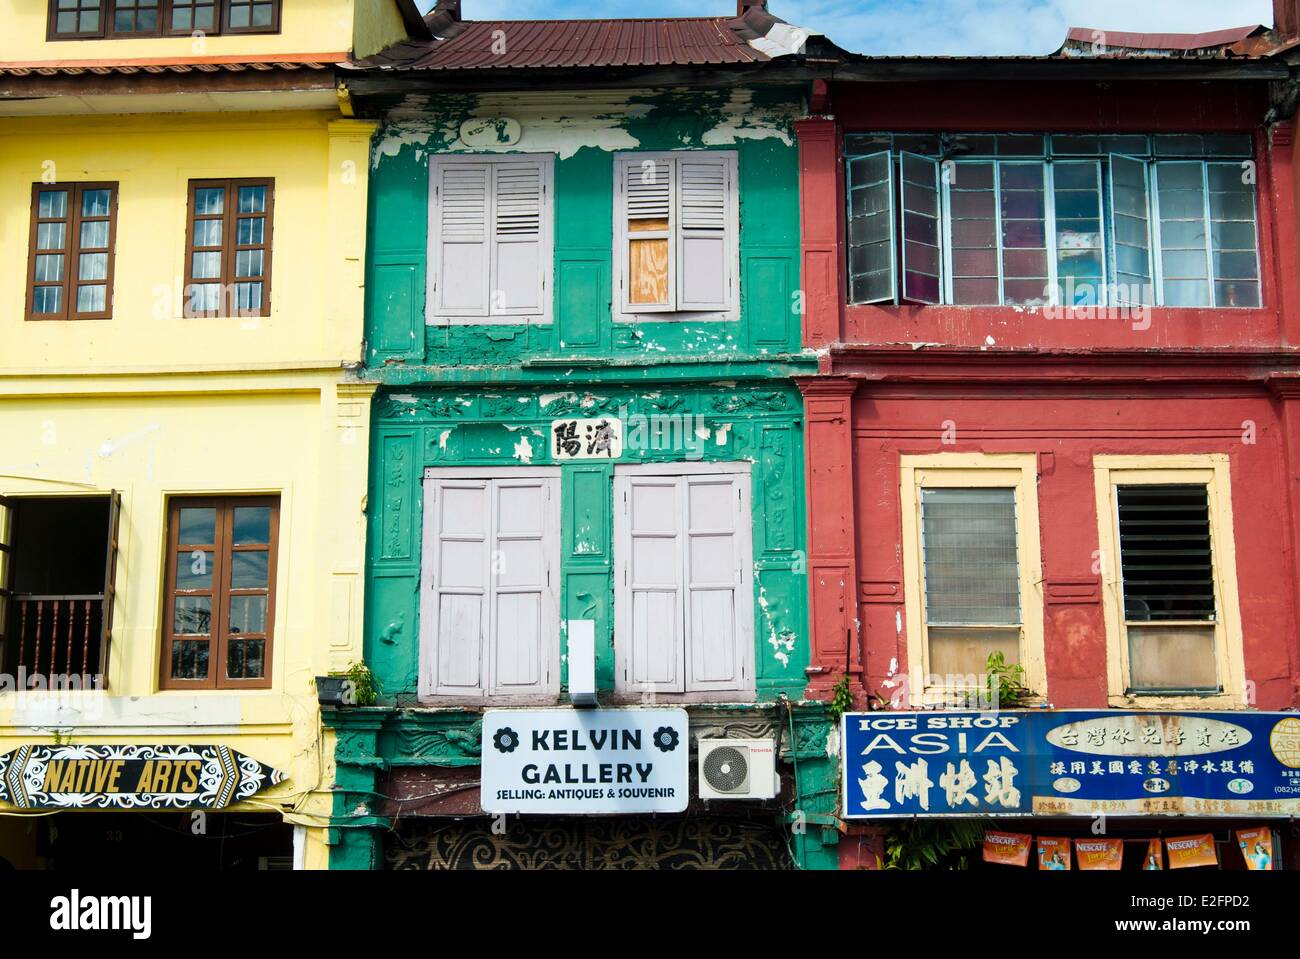 Malaysia Malaysian Borneo Sarawak State Kuching facade of houses